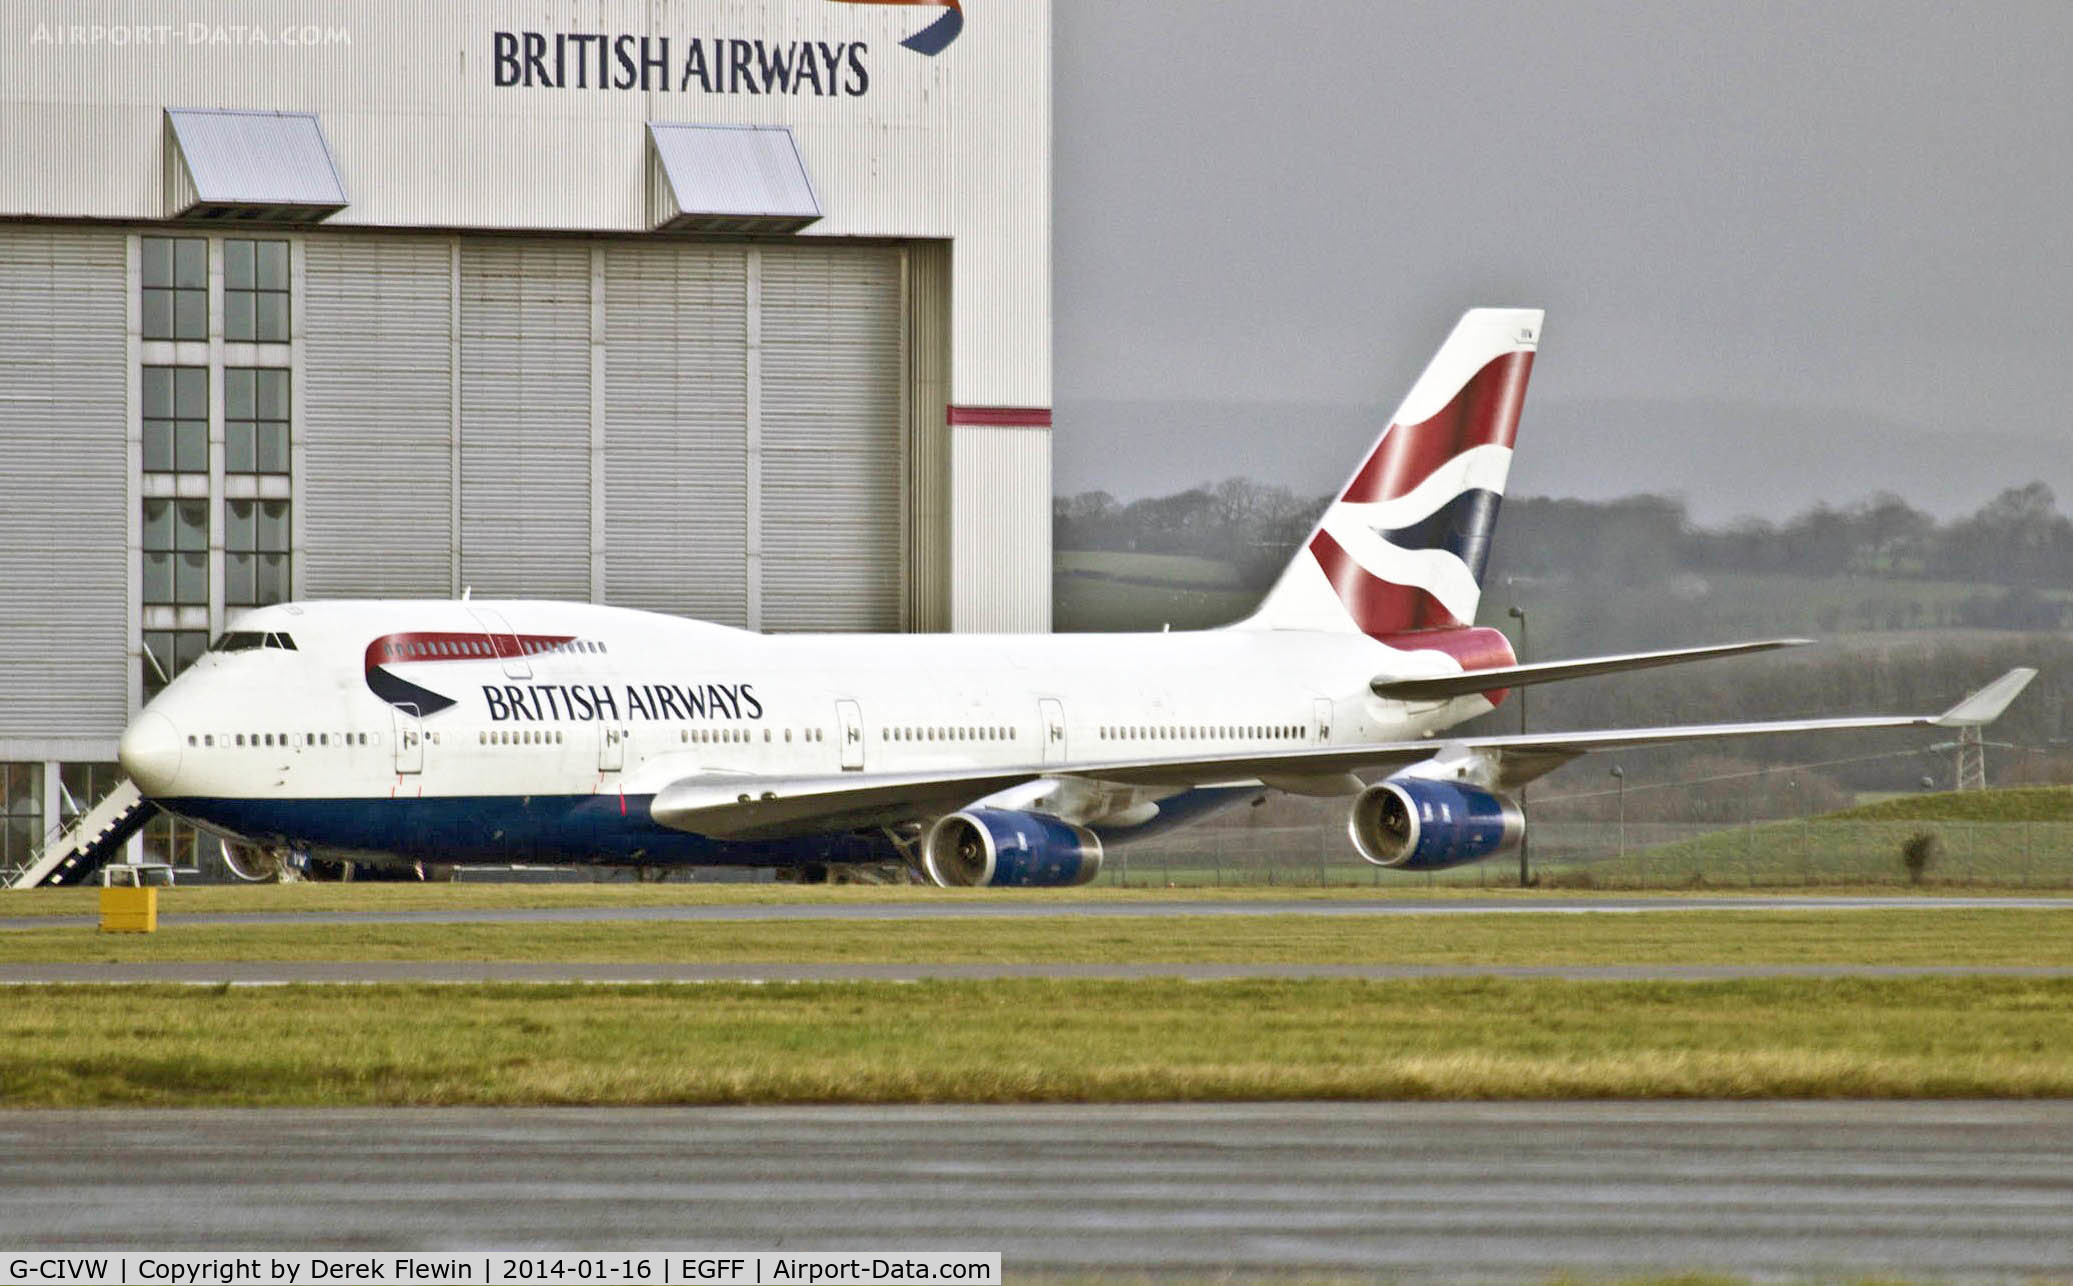 G-CIVW, 1998 Boeing 747-436 C/N 25822, 747-436 seen at BAMC, departed at 1700 to Heathrow callsign Speedbird 9172.